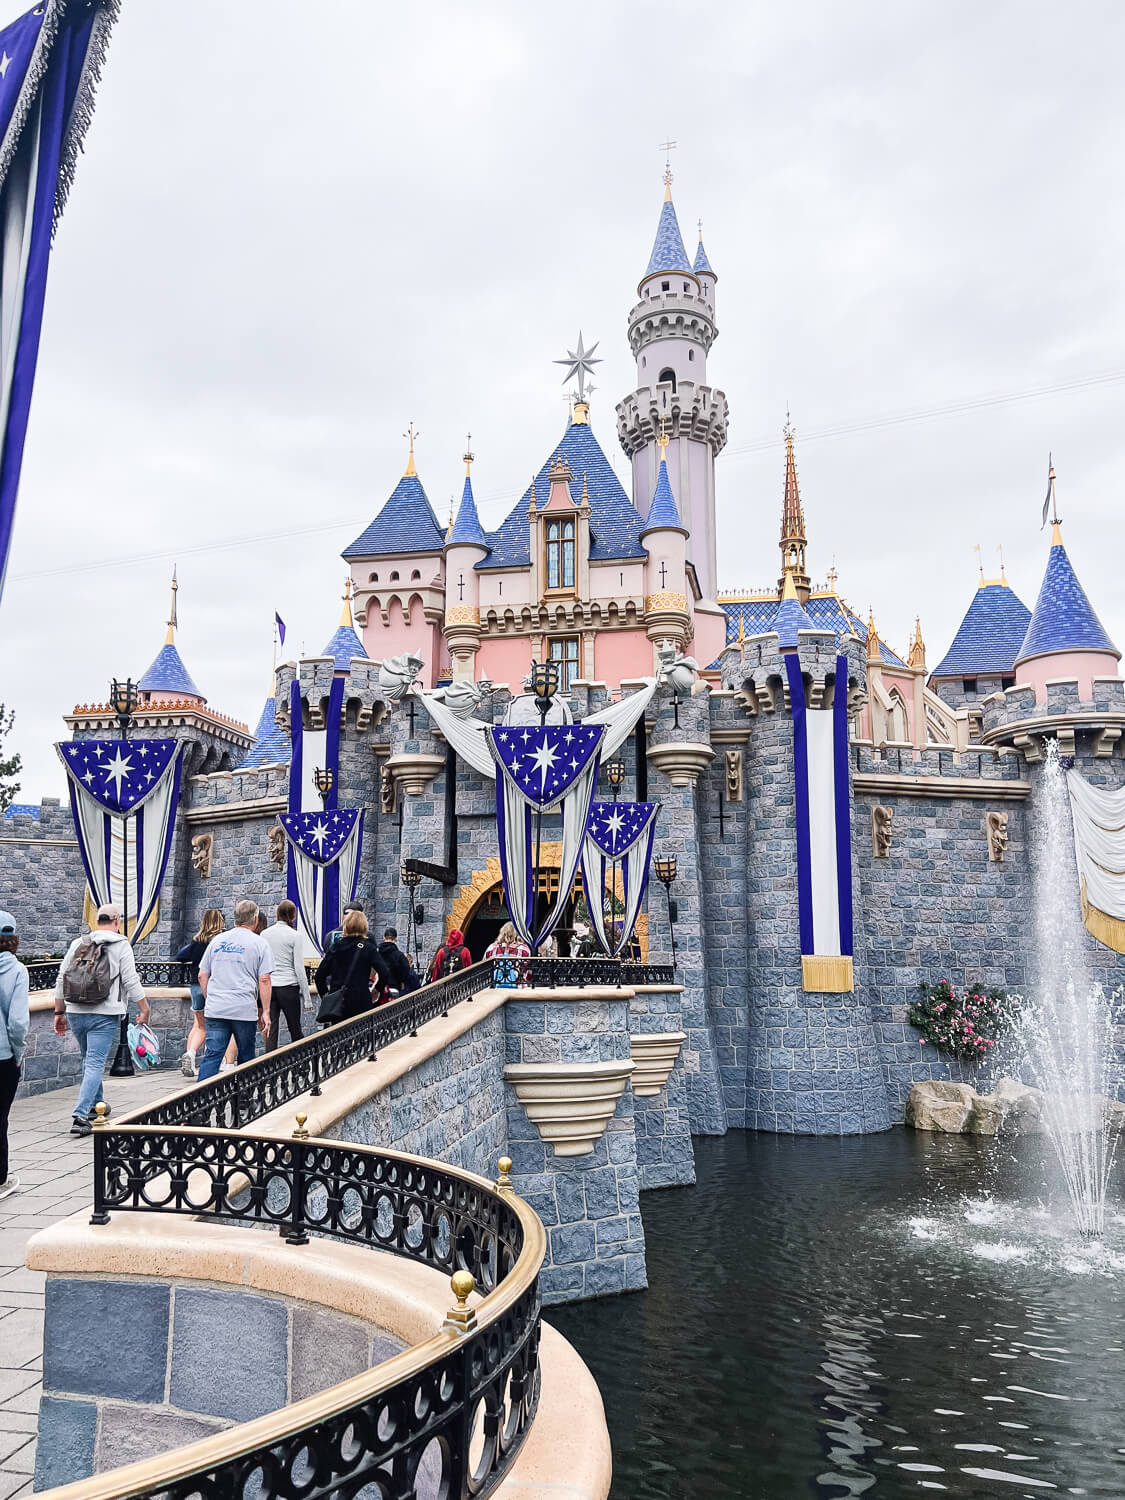 A classic view of Disneyland in Anaheim, CA. Sleeping Beauty Castle Walkthrough. 